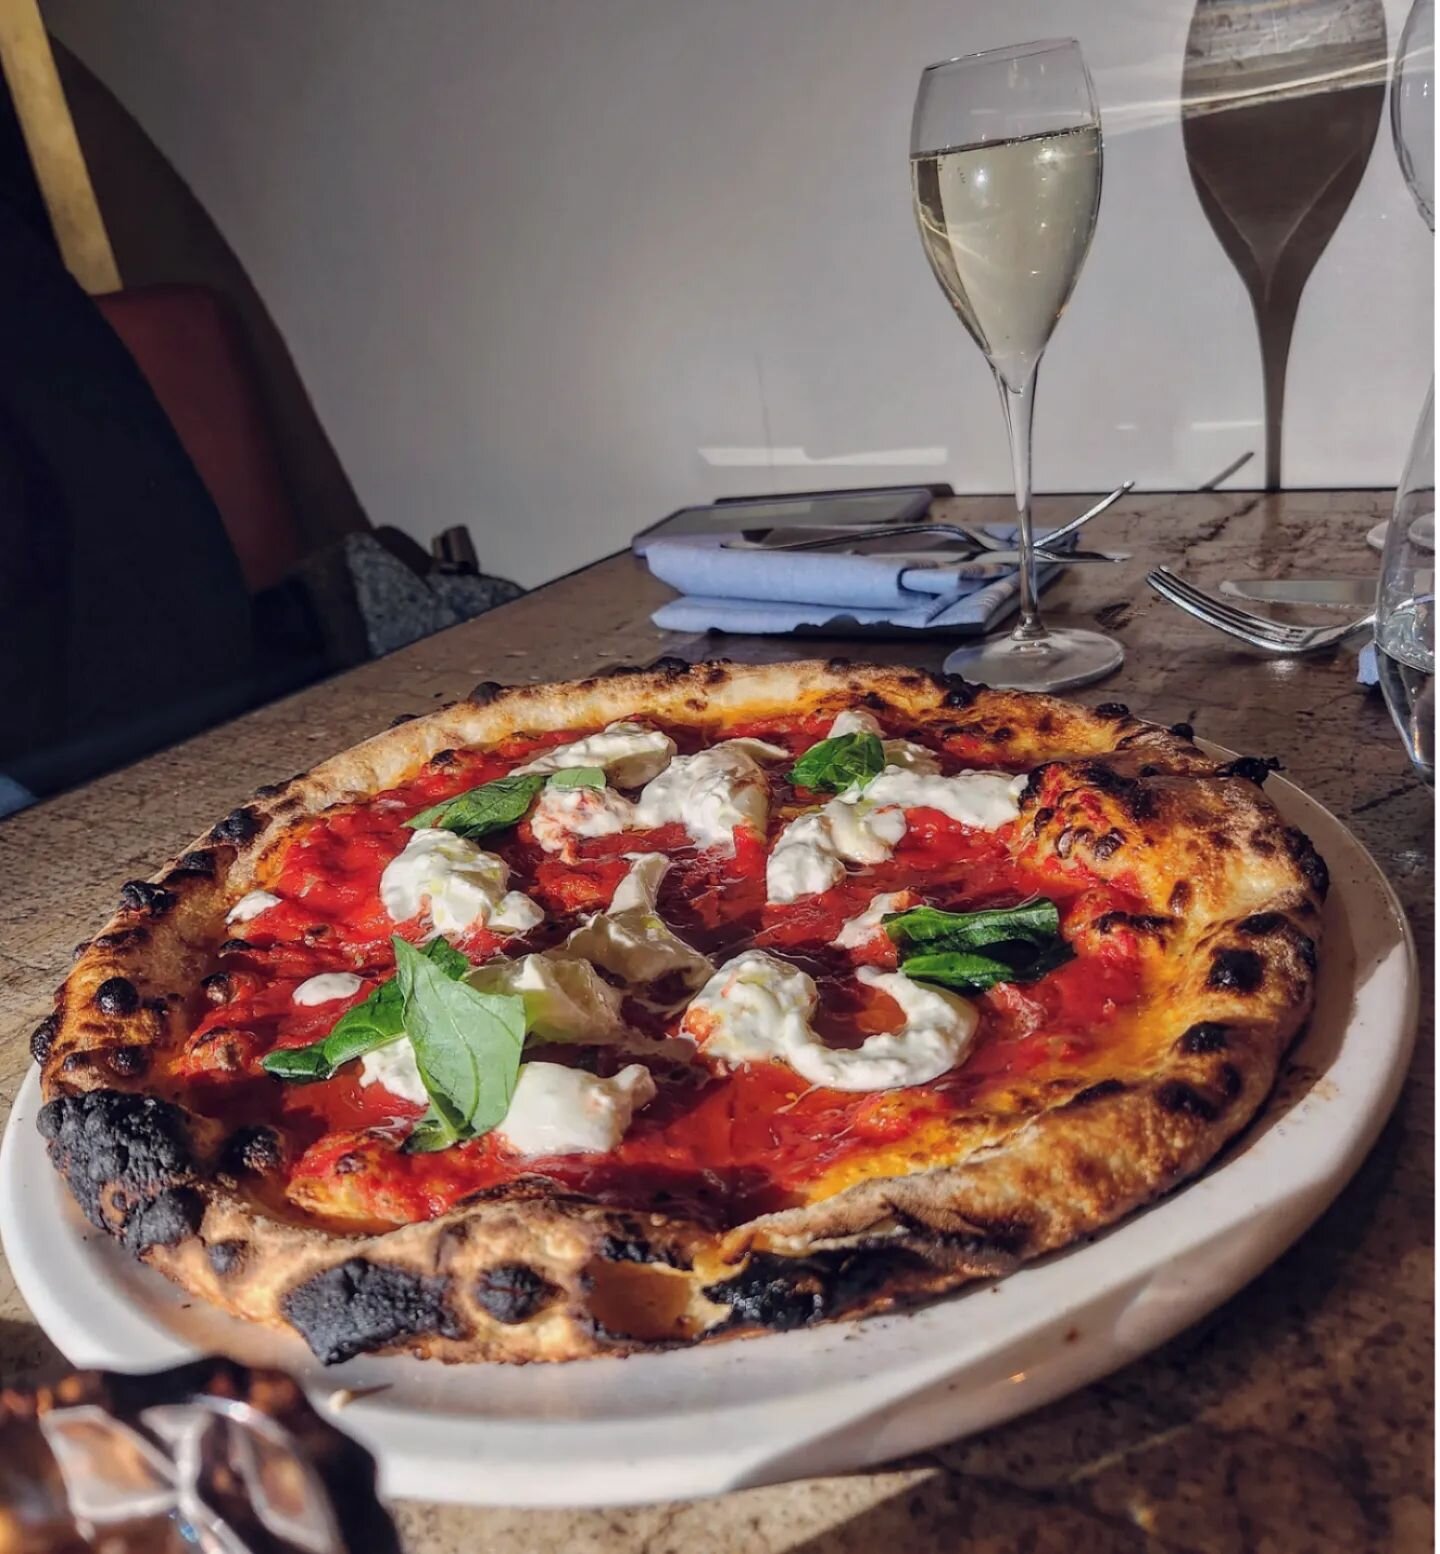 Burrata pizza, Prosecco, and last but not least.. the Bucatini alla Carbonara ✨️🍕 @orettatoronto 
.
.
.
.
#food #foodie #foodpics #foodporn #yelpelite #yelp #millennial #oretta #pasta #pizza #italianfood #buratta #mississauga #toronto #torontofood #